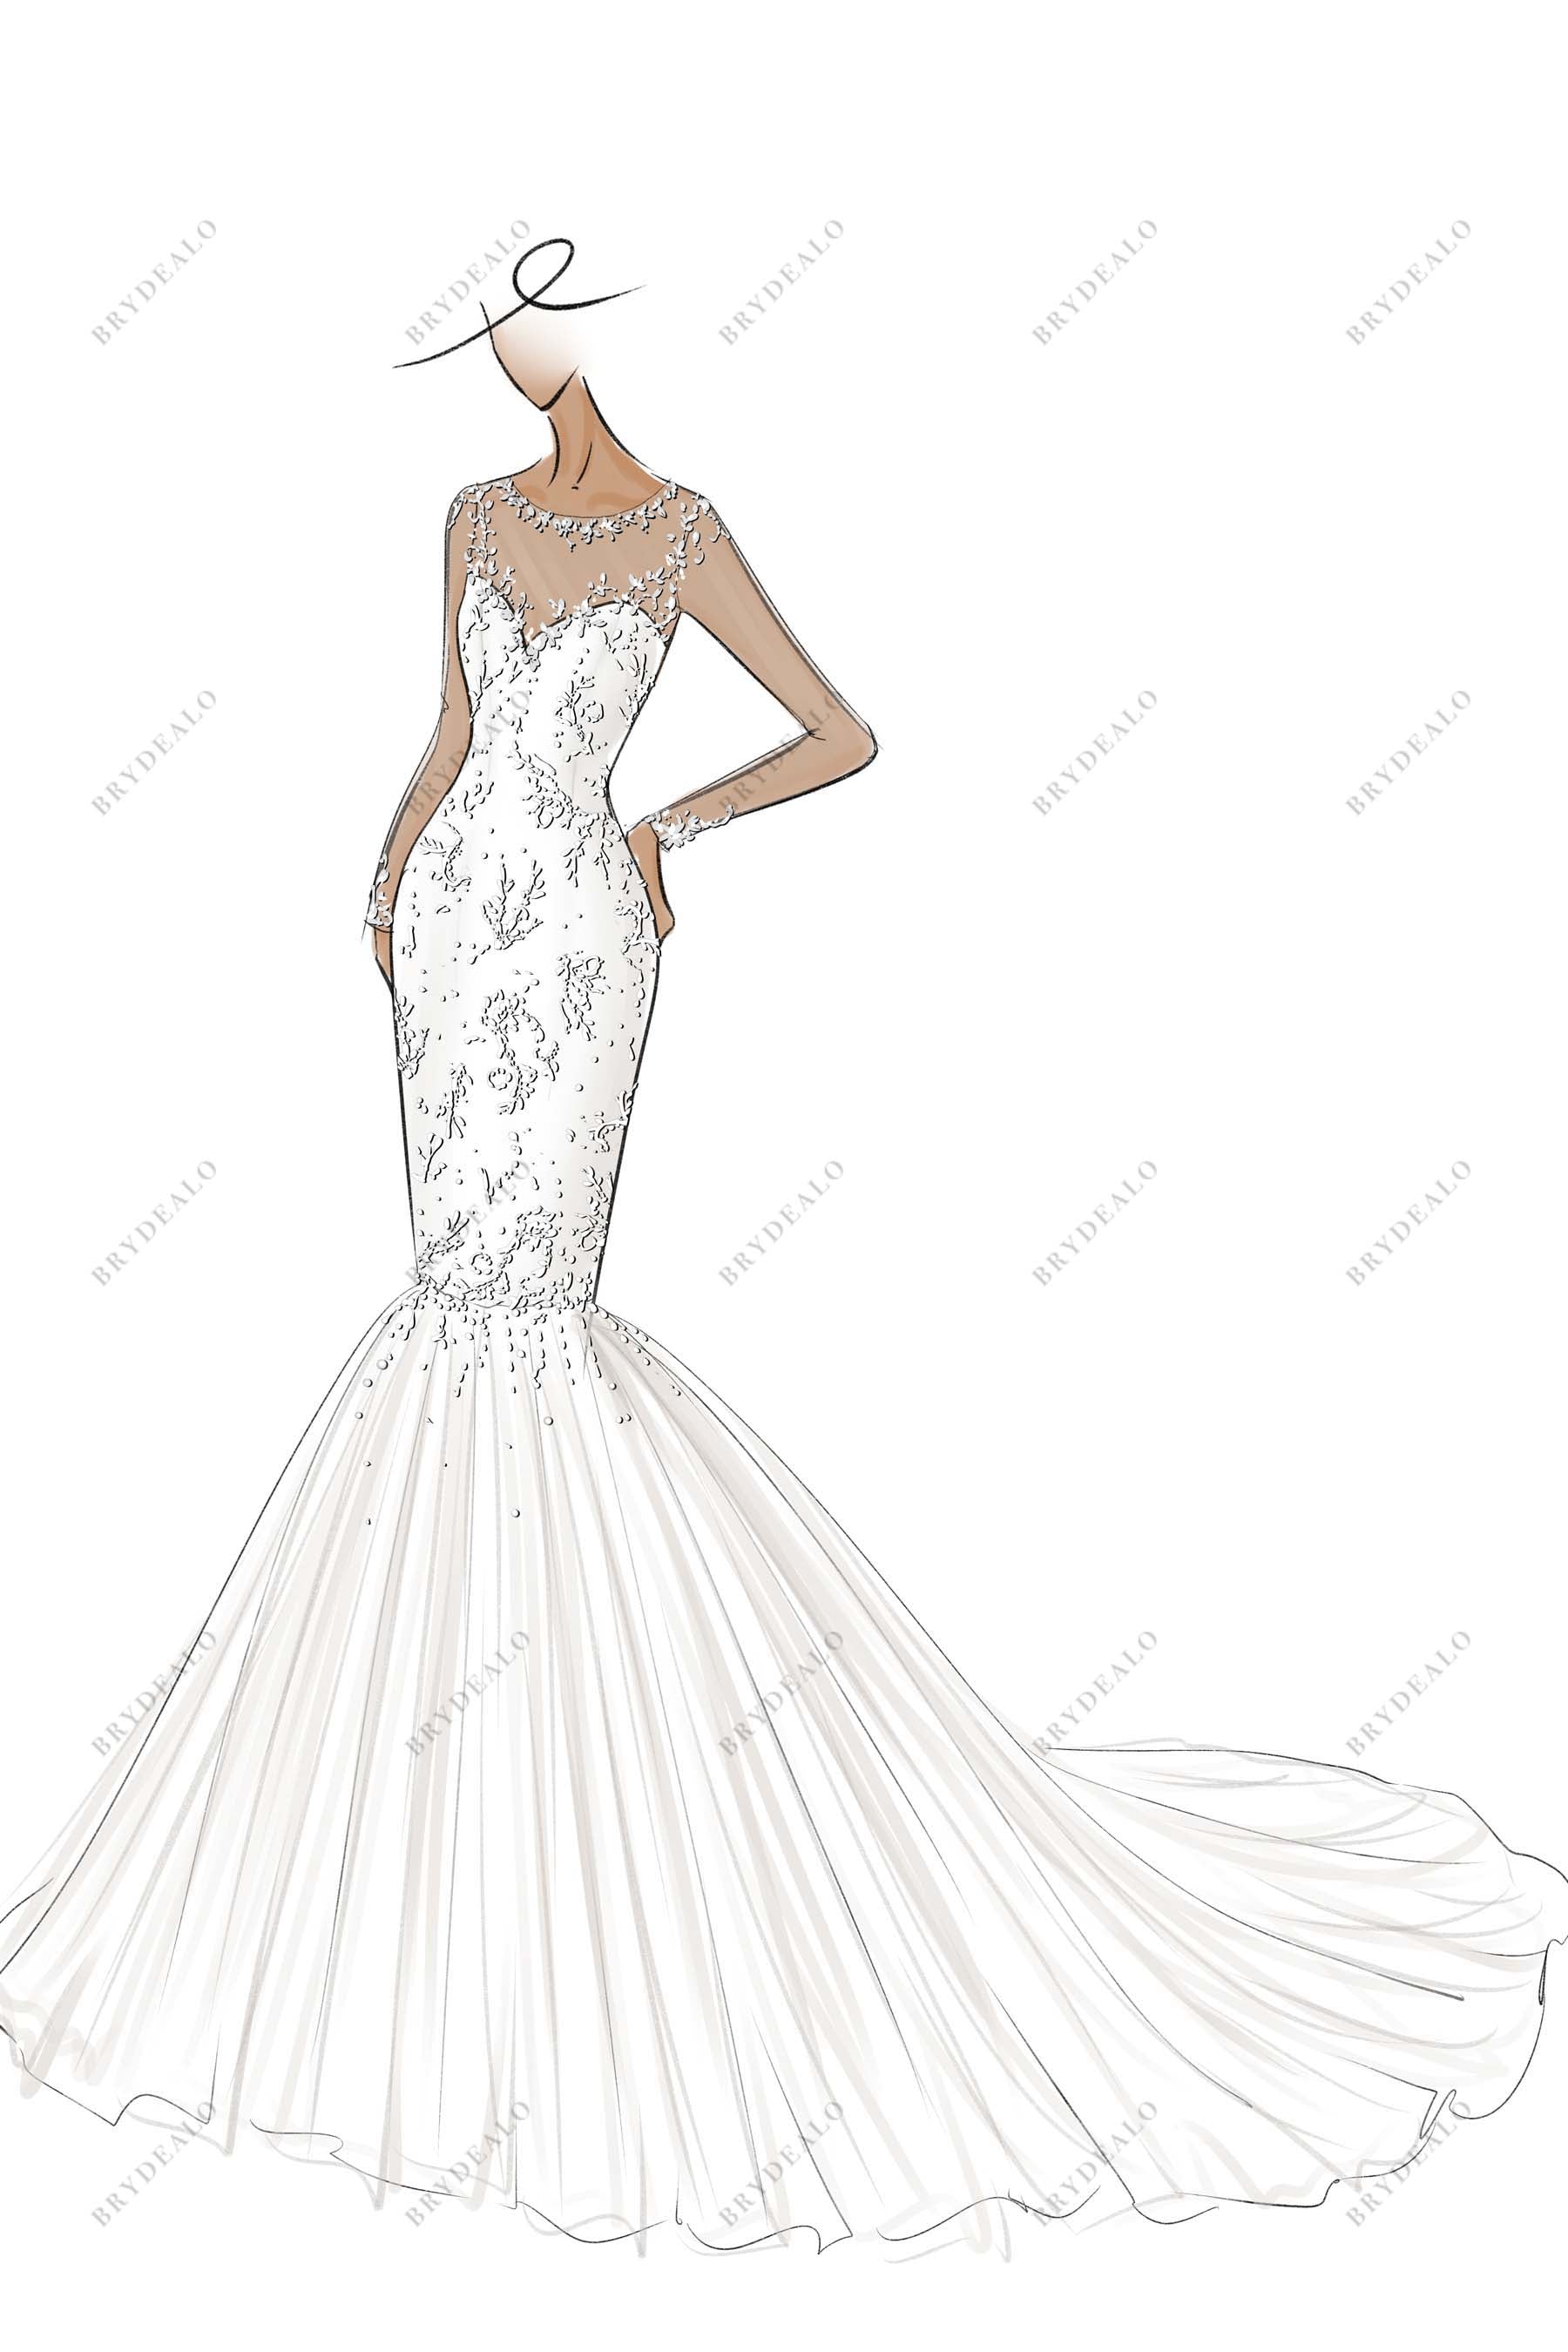 Lace Illusion Neck Designer Trumpet Bridal Dress Sketch